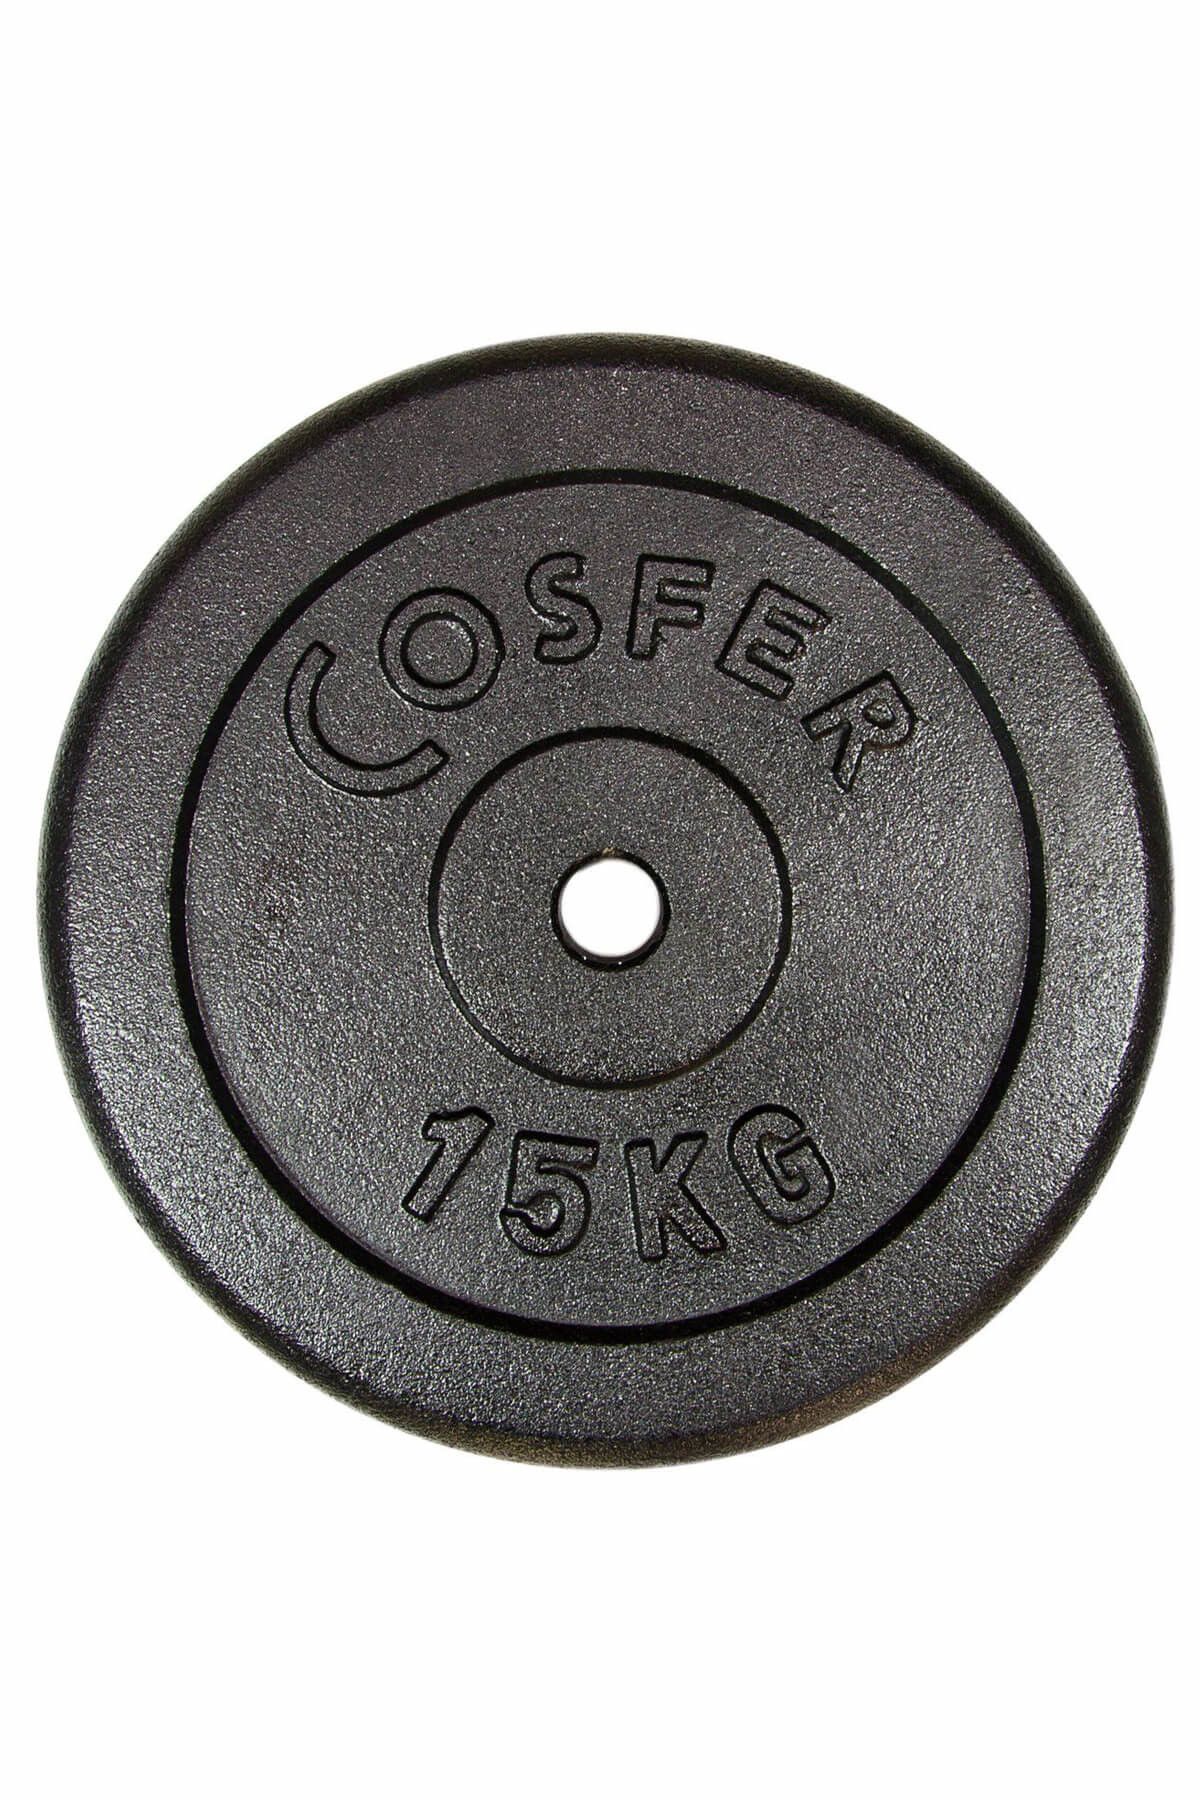 Cosfer CSF-15 Kg Siyah Döküm Plaka